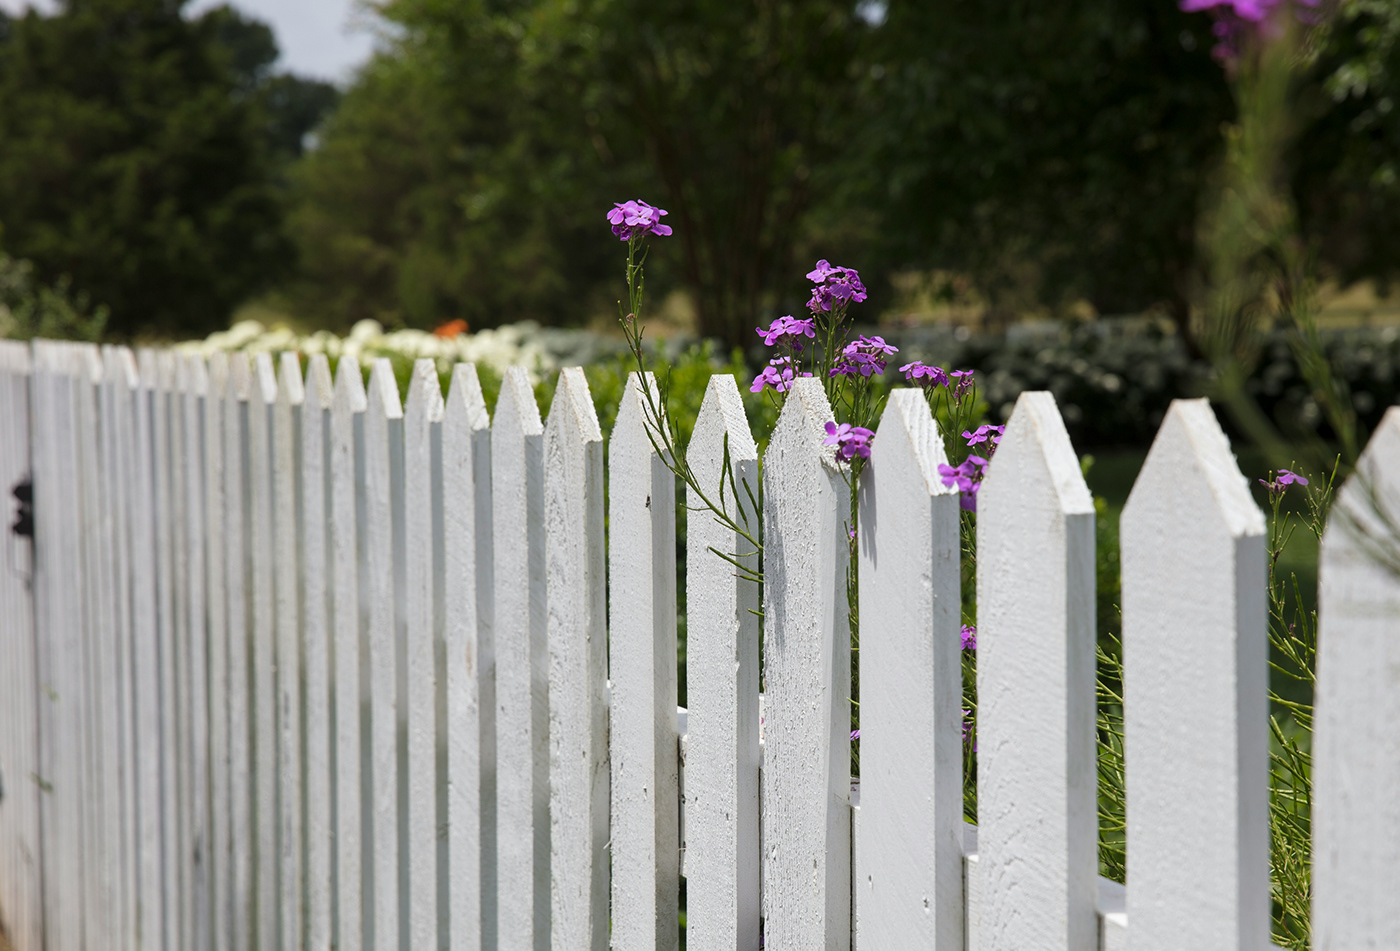 fences fence installation Fence installers Melbourne Australia fenceinstallermelbourne